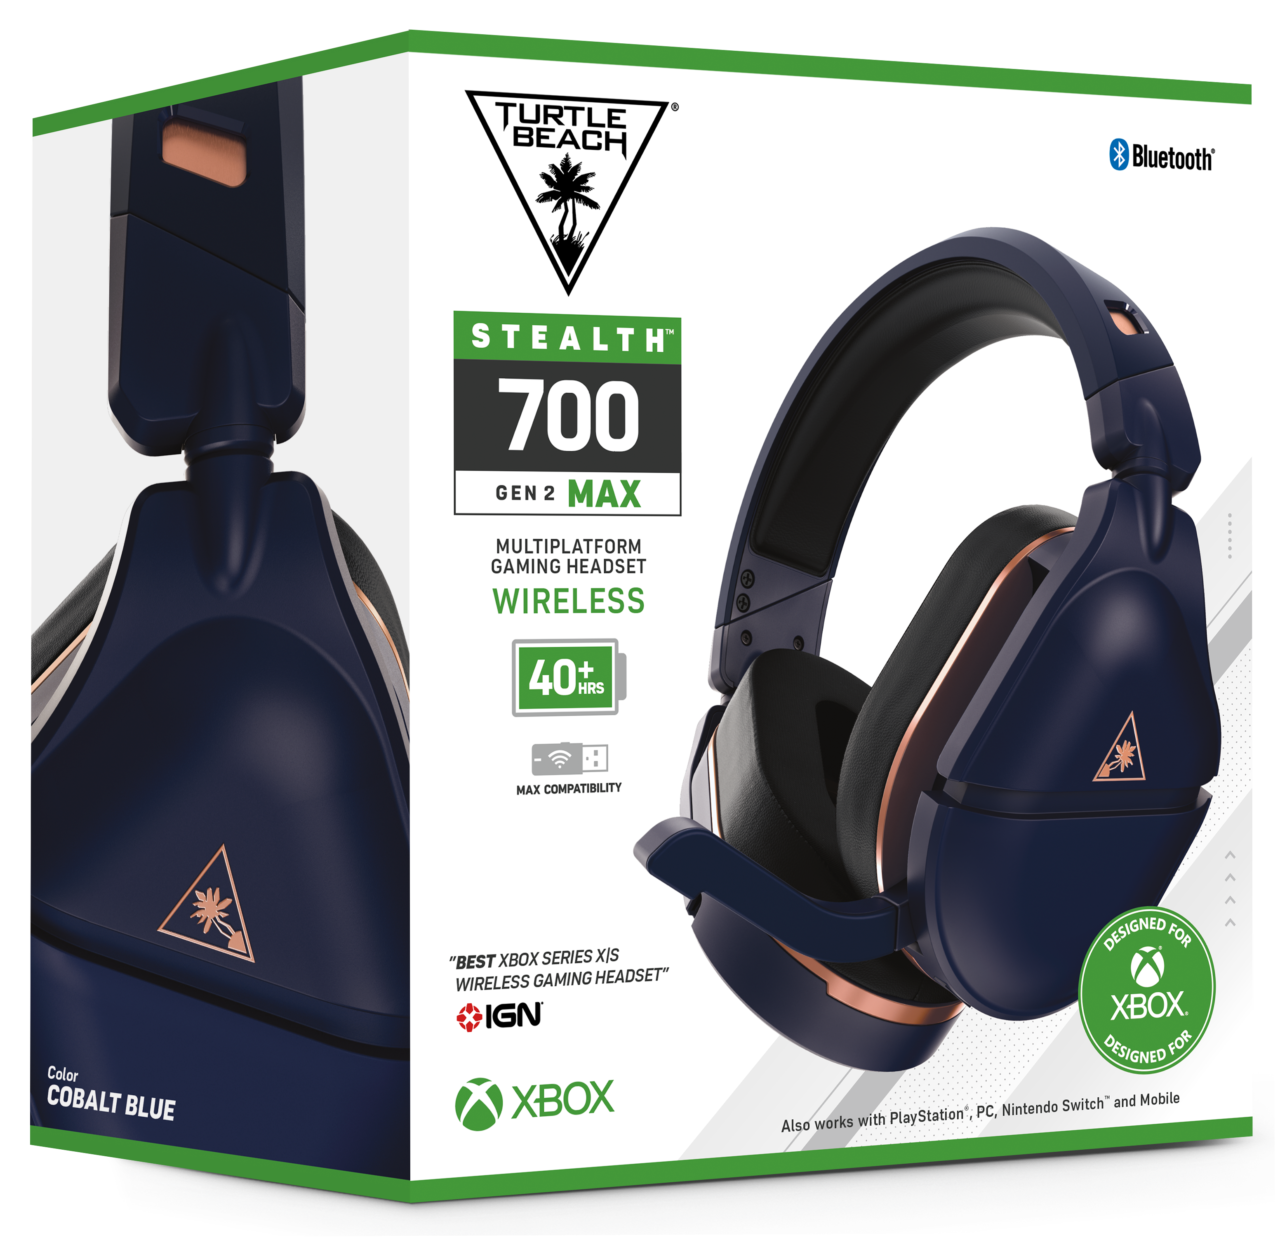 Stealth 700 Gen 2 Max Premium Wireless Gaming Headset for Xbox (Turtle Beach)